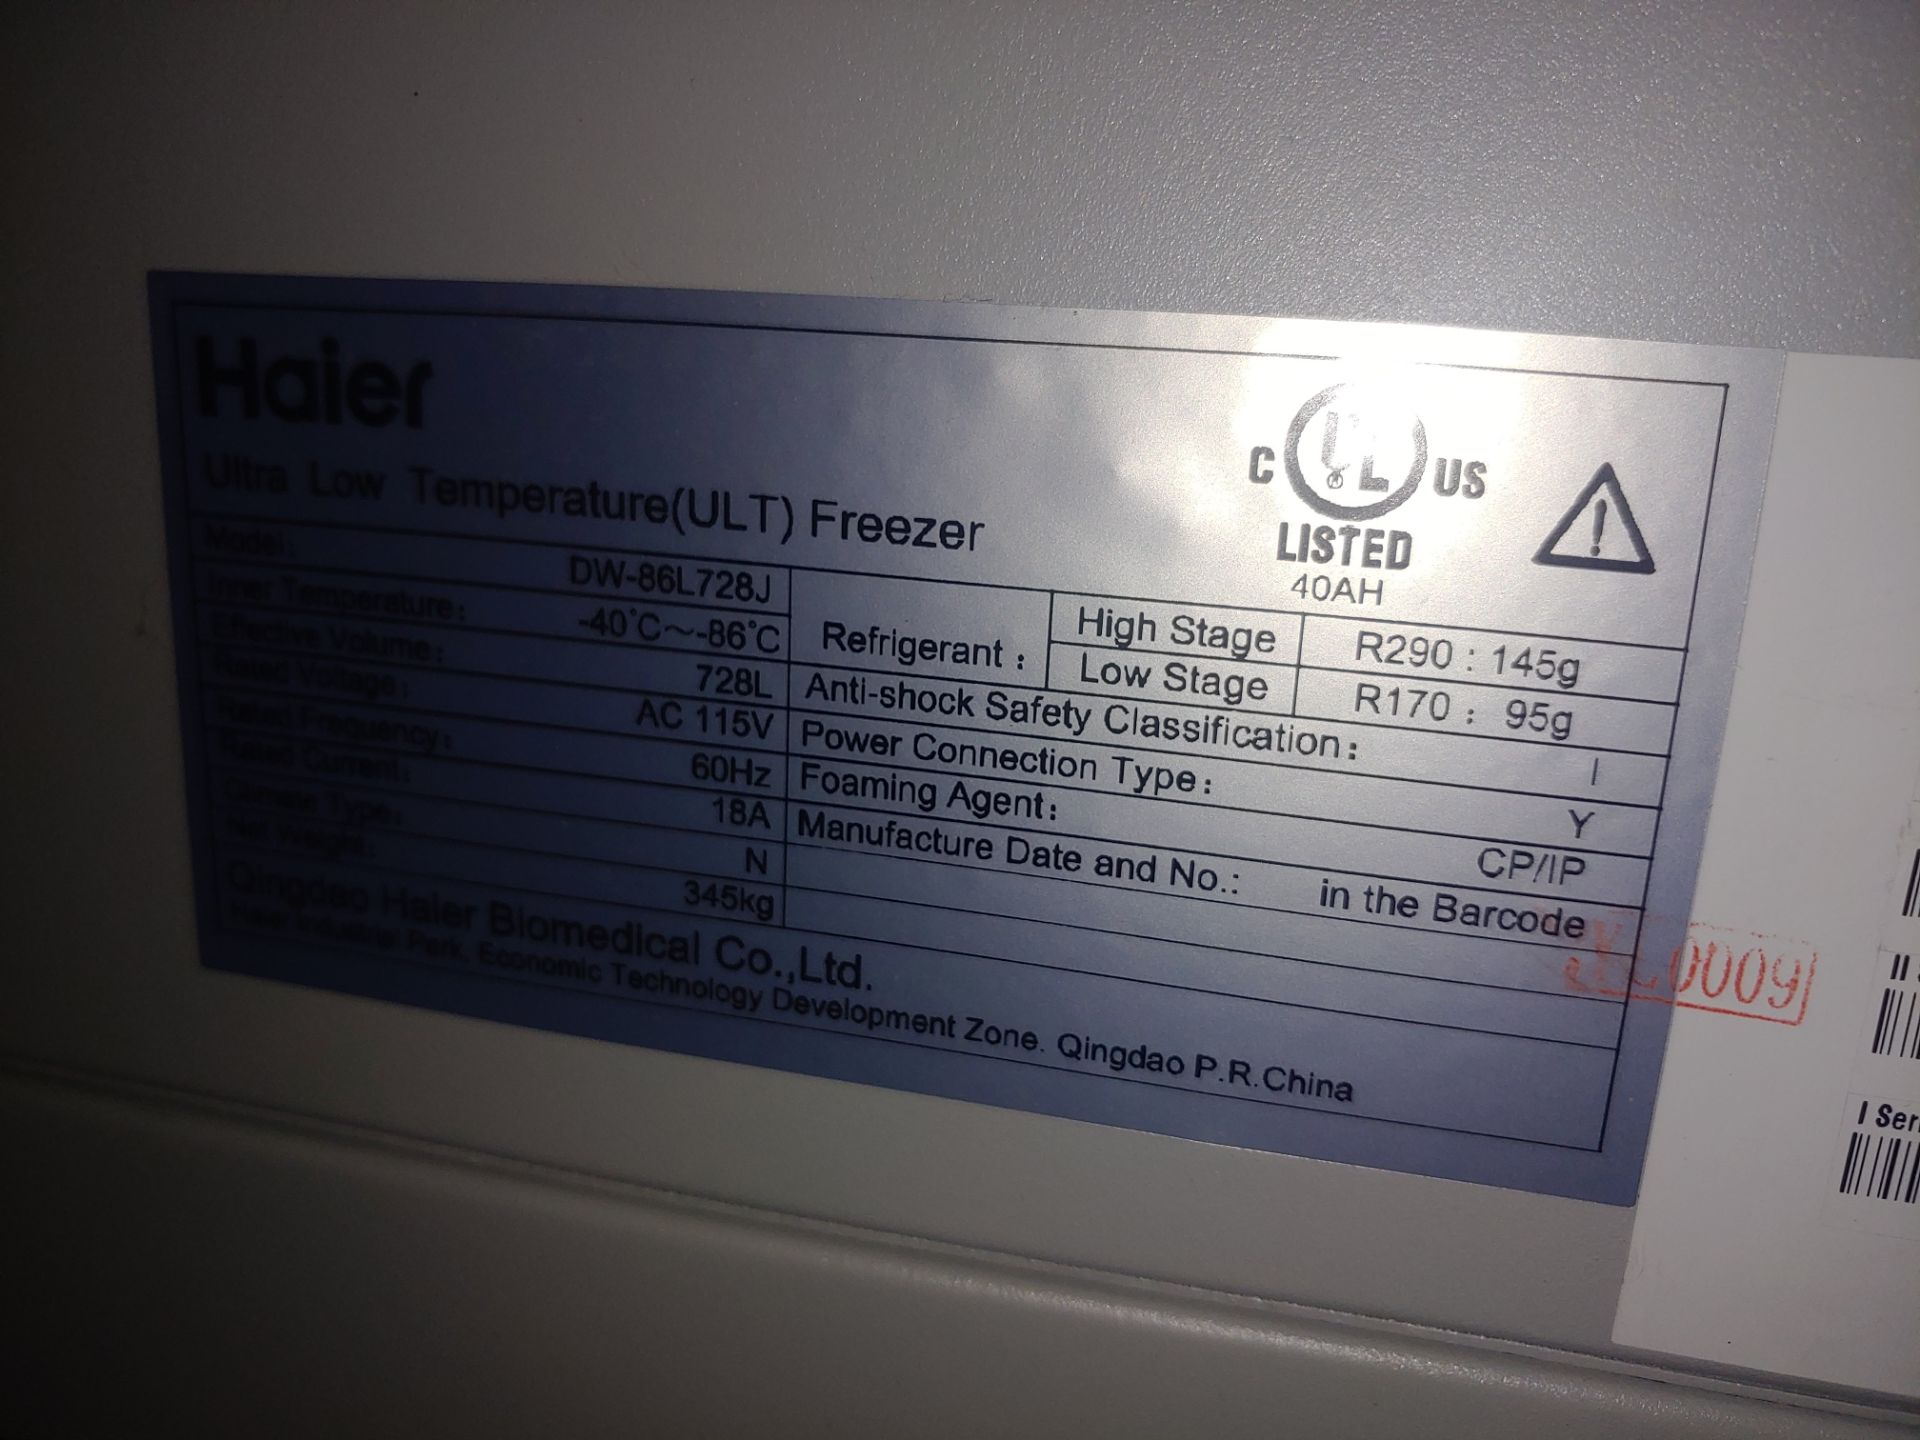 Ultra Low Temp Freezer, Sayre, PA - Image 2 of 2